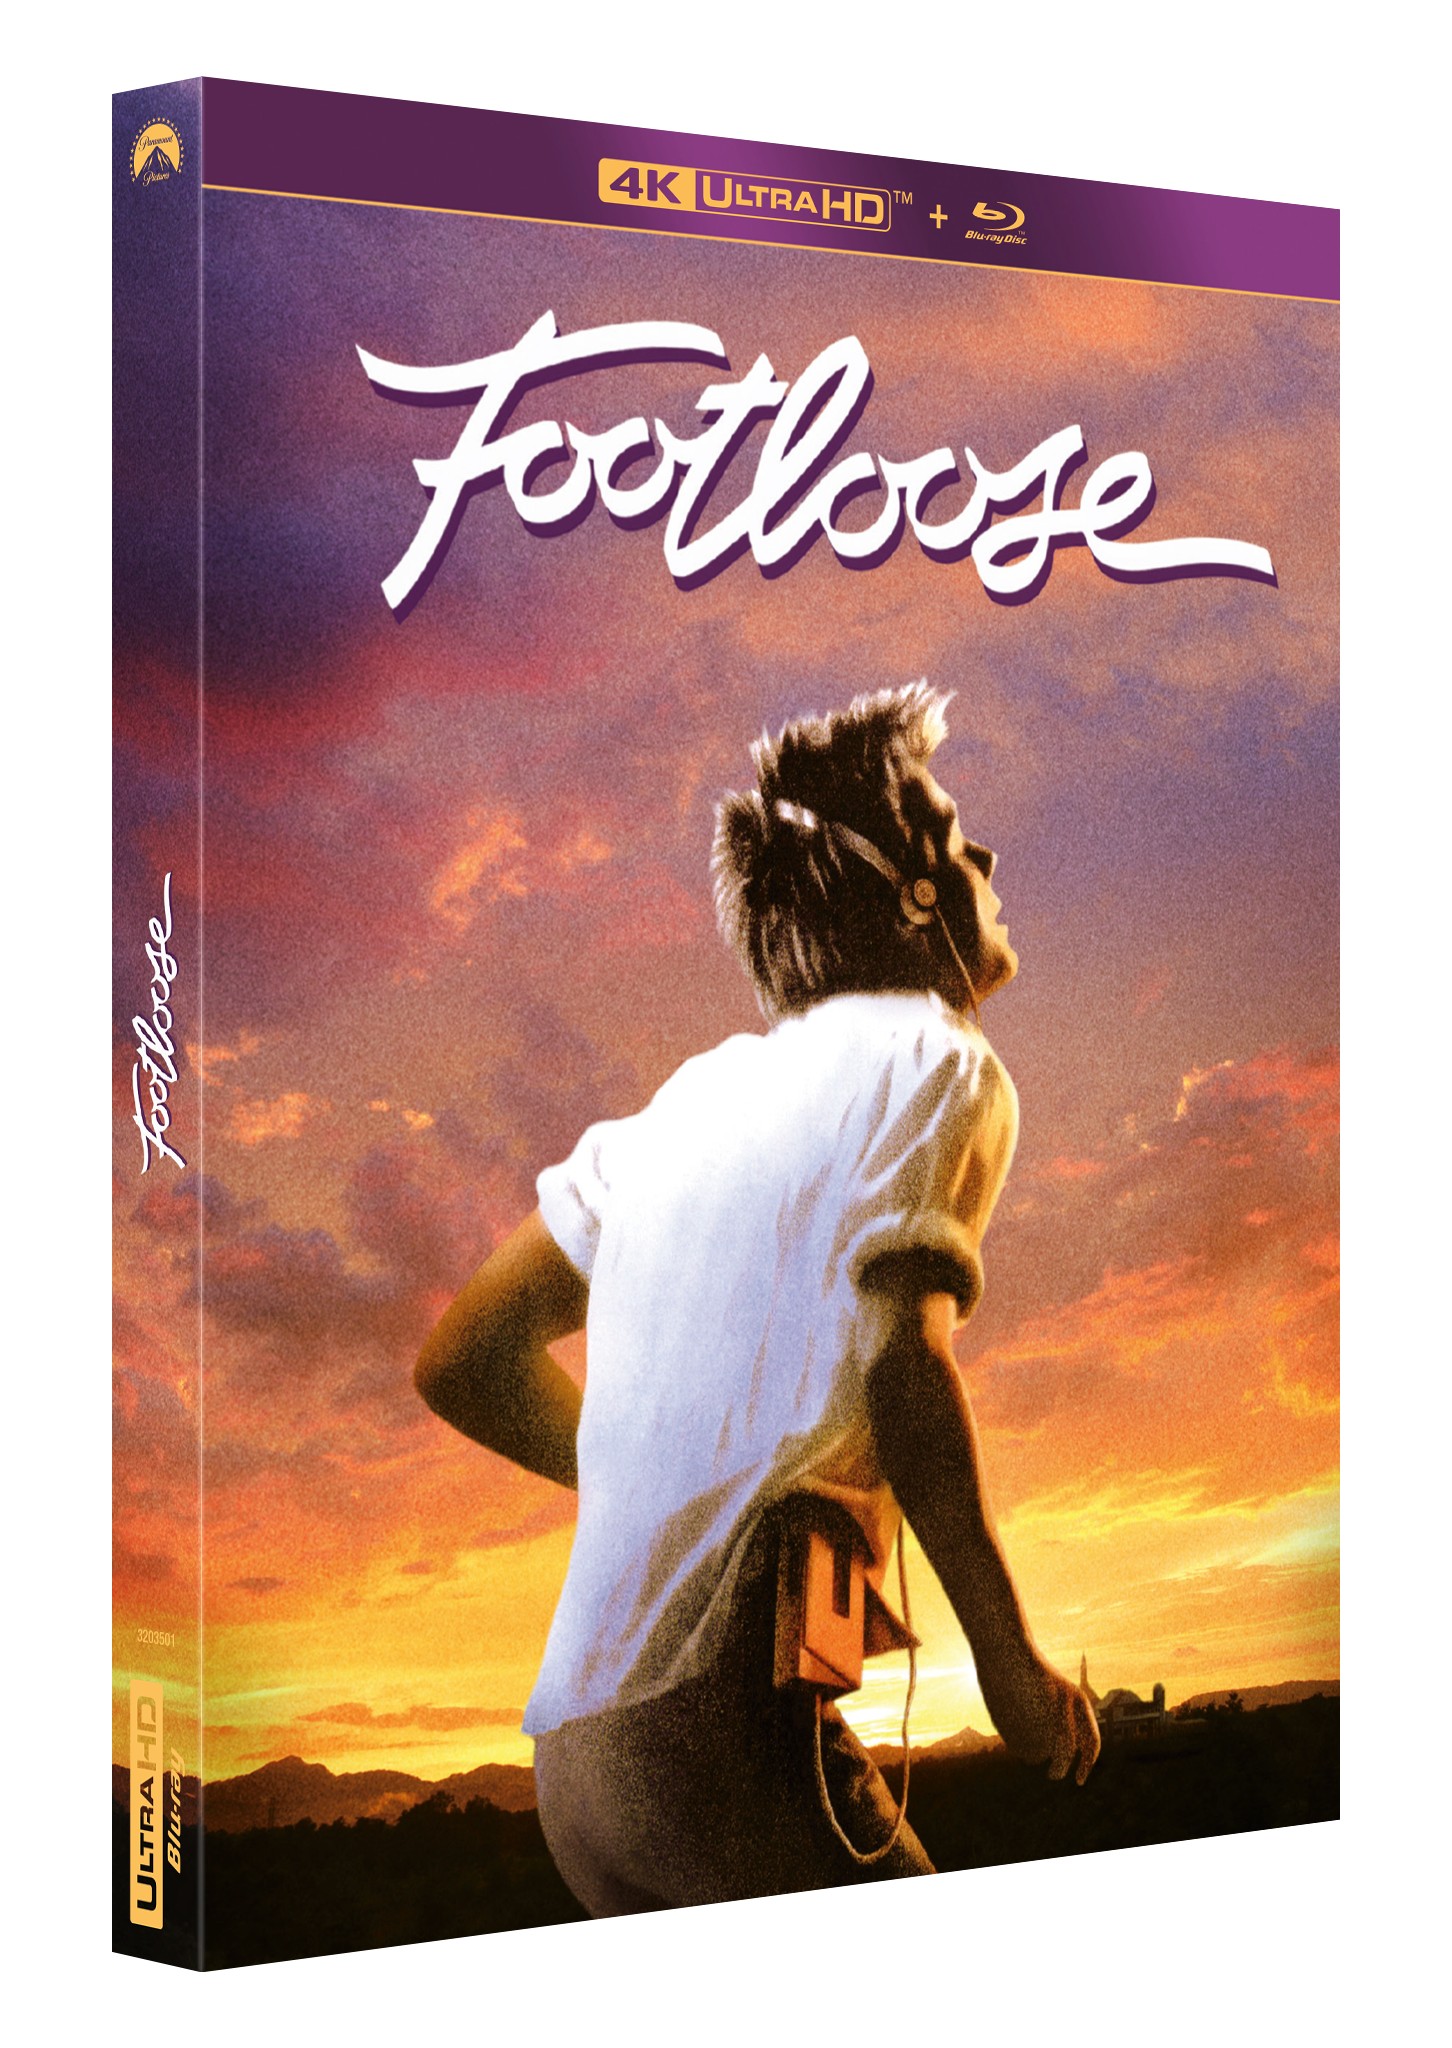 FOOTLOOSE (1984) - COMBO UHD 4K + BD